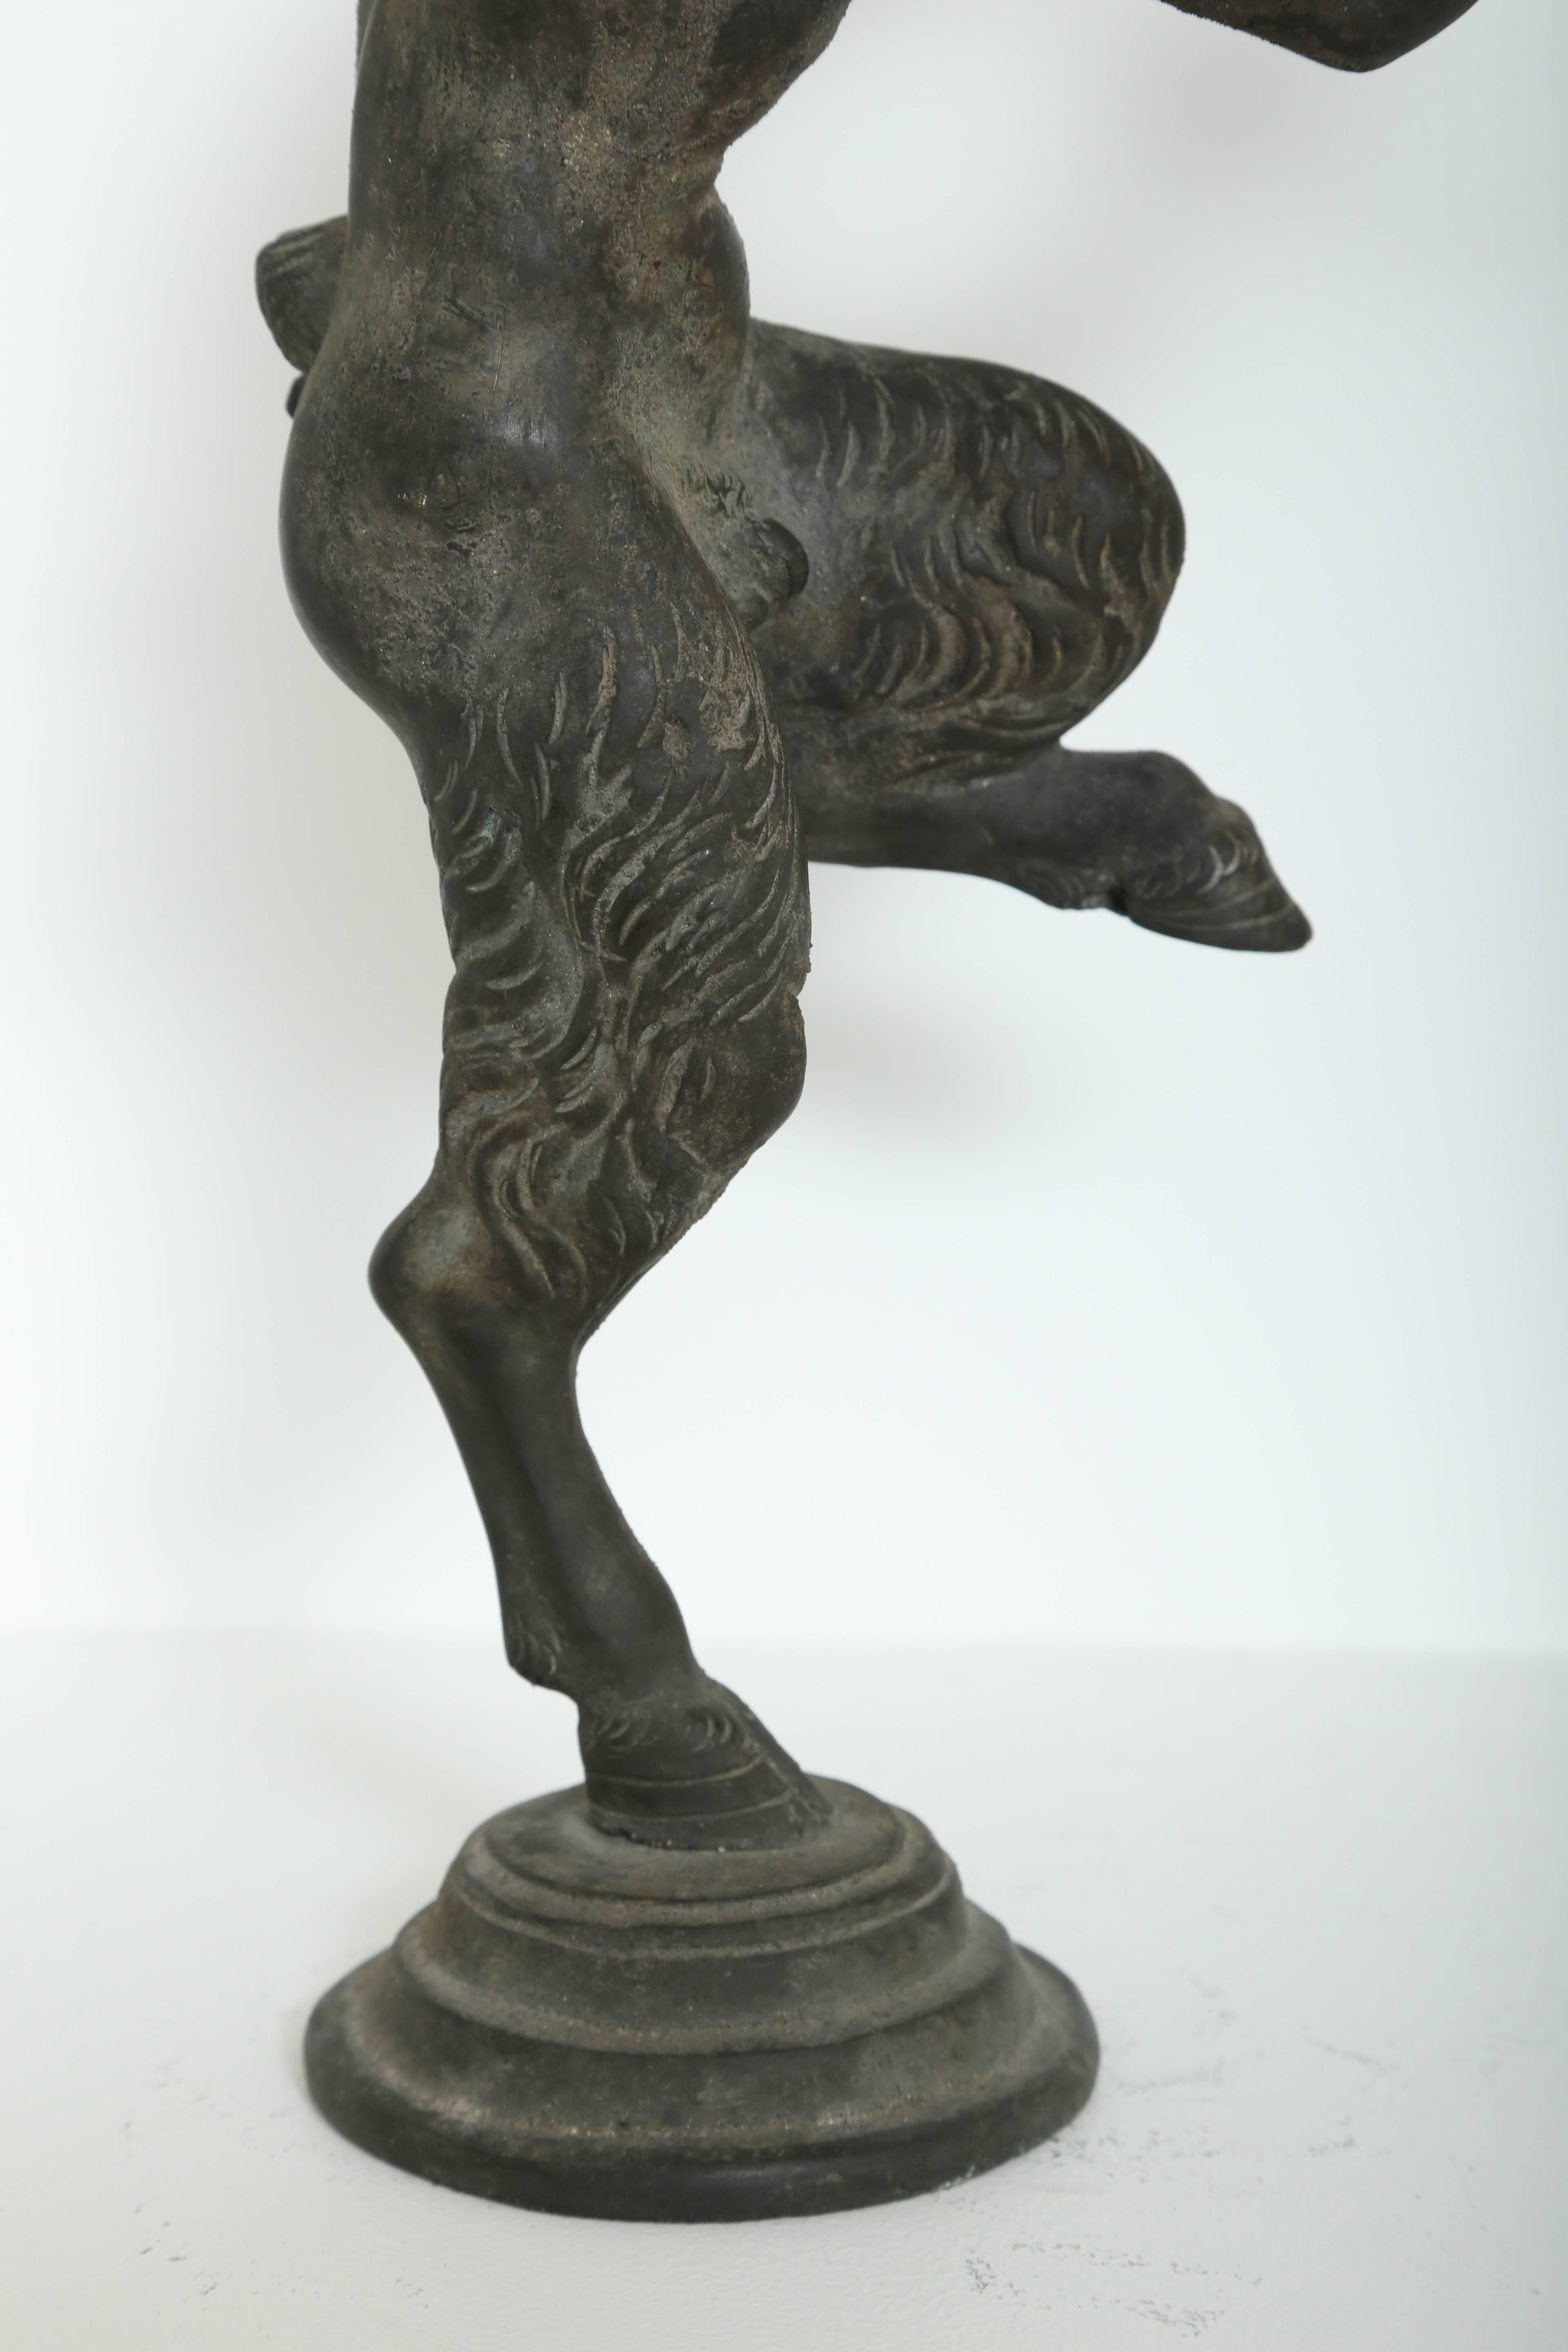 Cast 19th Century Antique Bronze Sculpture of Pan the Mythological God